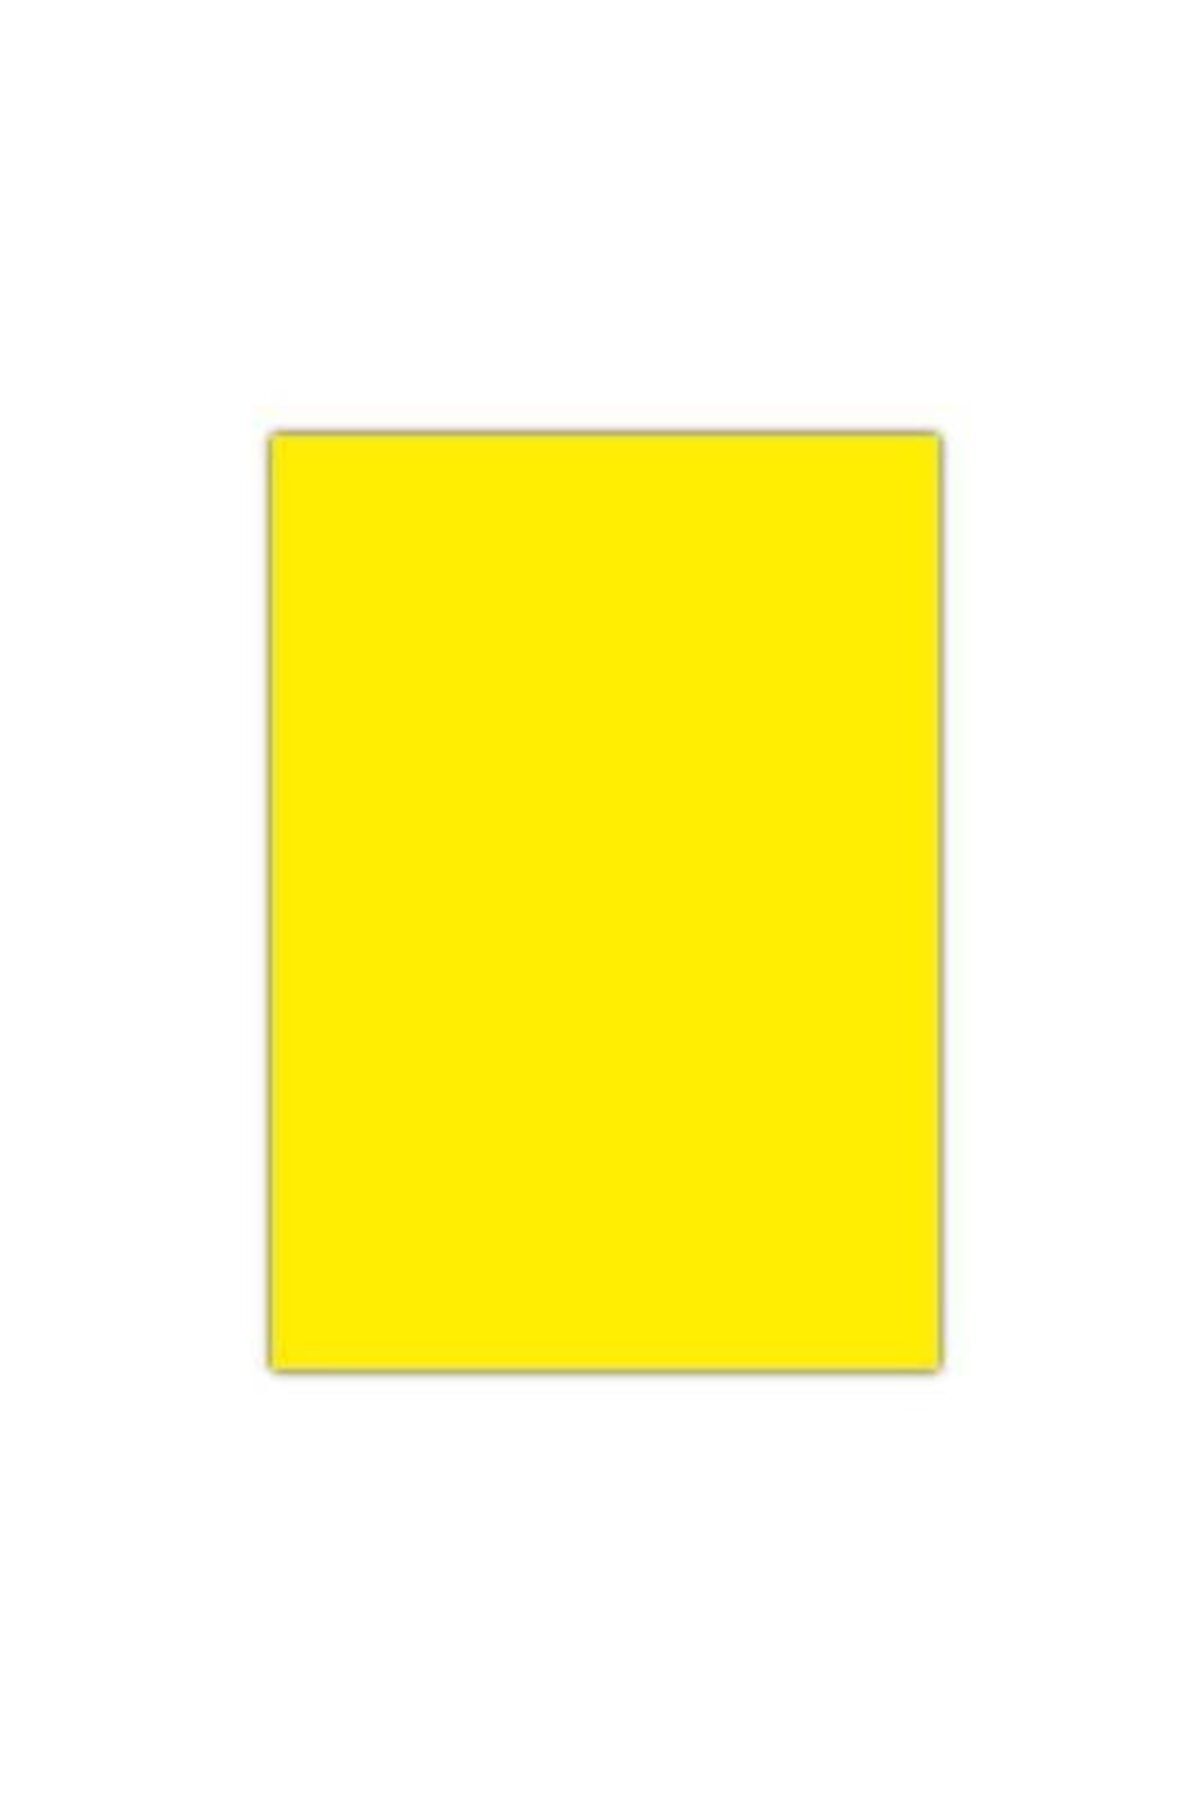 Aslans Sarı Fon Kartonu 10 Adet 50x70